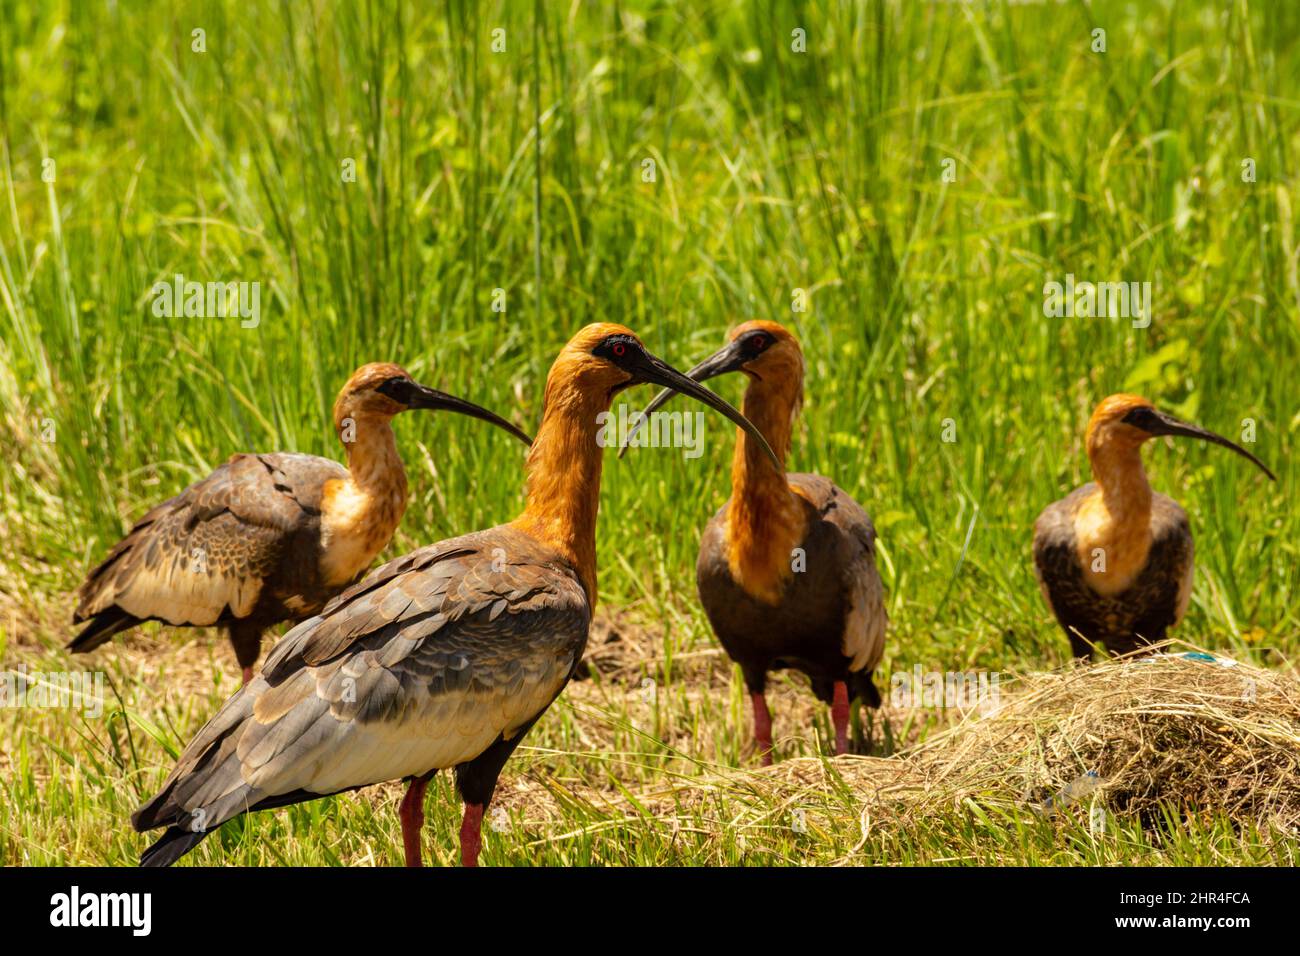 Goiânia, Goias, Brazil – February 24, 2022: heristicus caudatus. Four birds in the middle of the grass feeding. Stock Photo